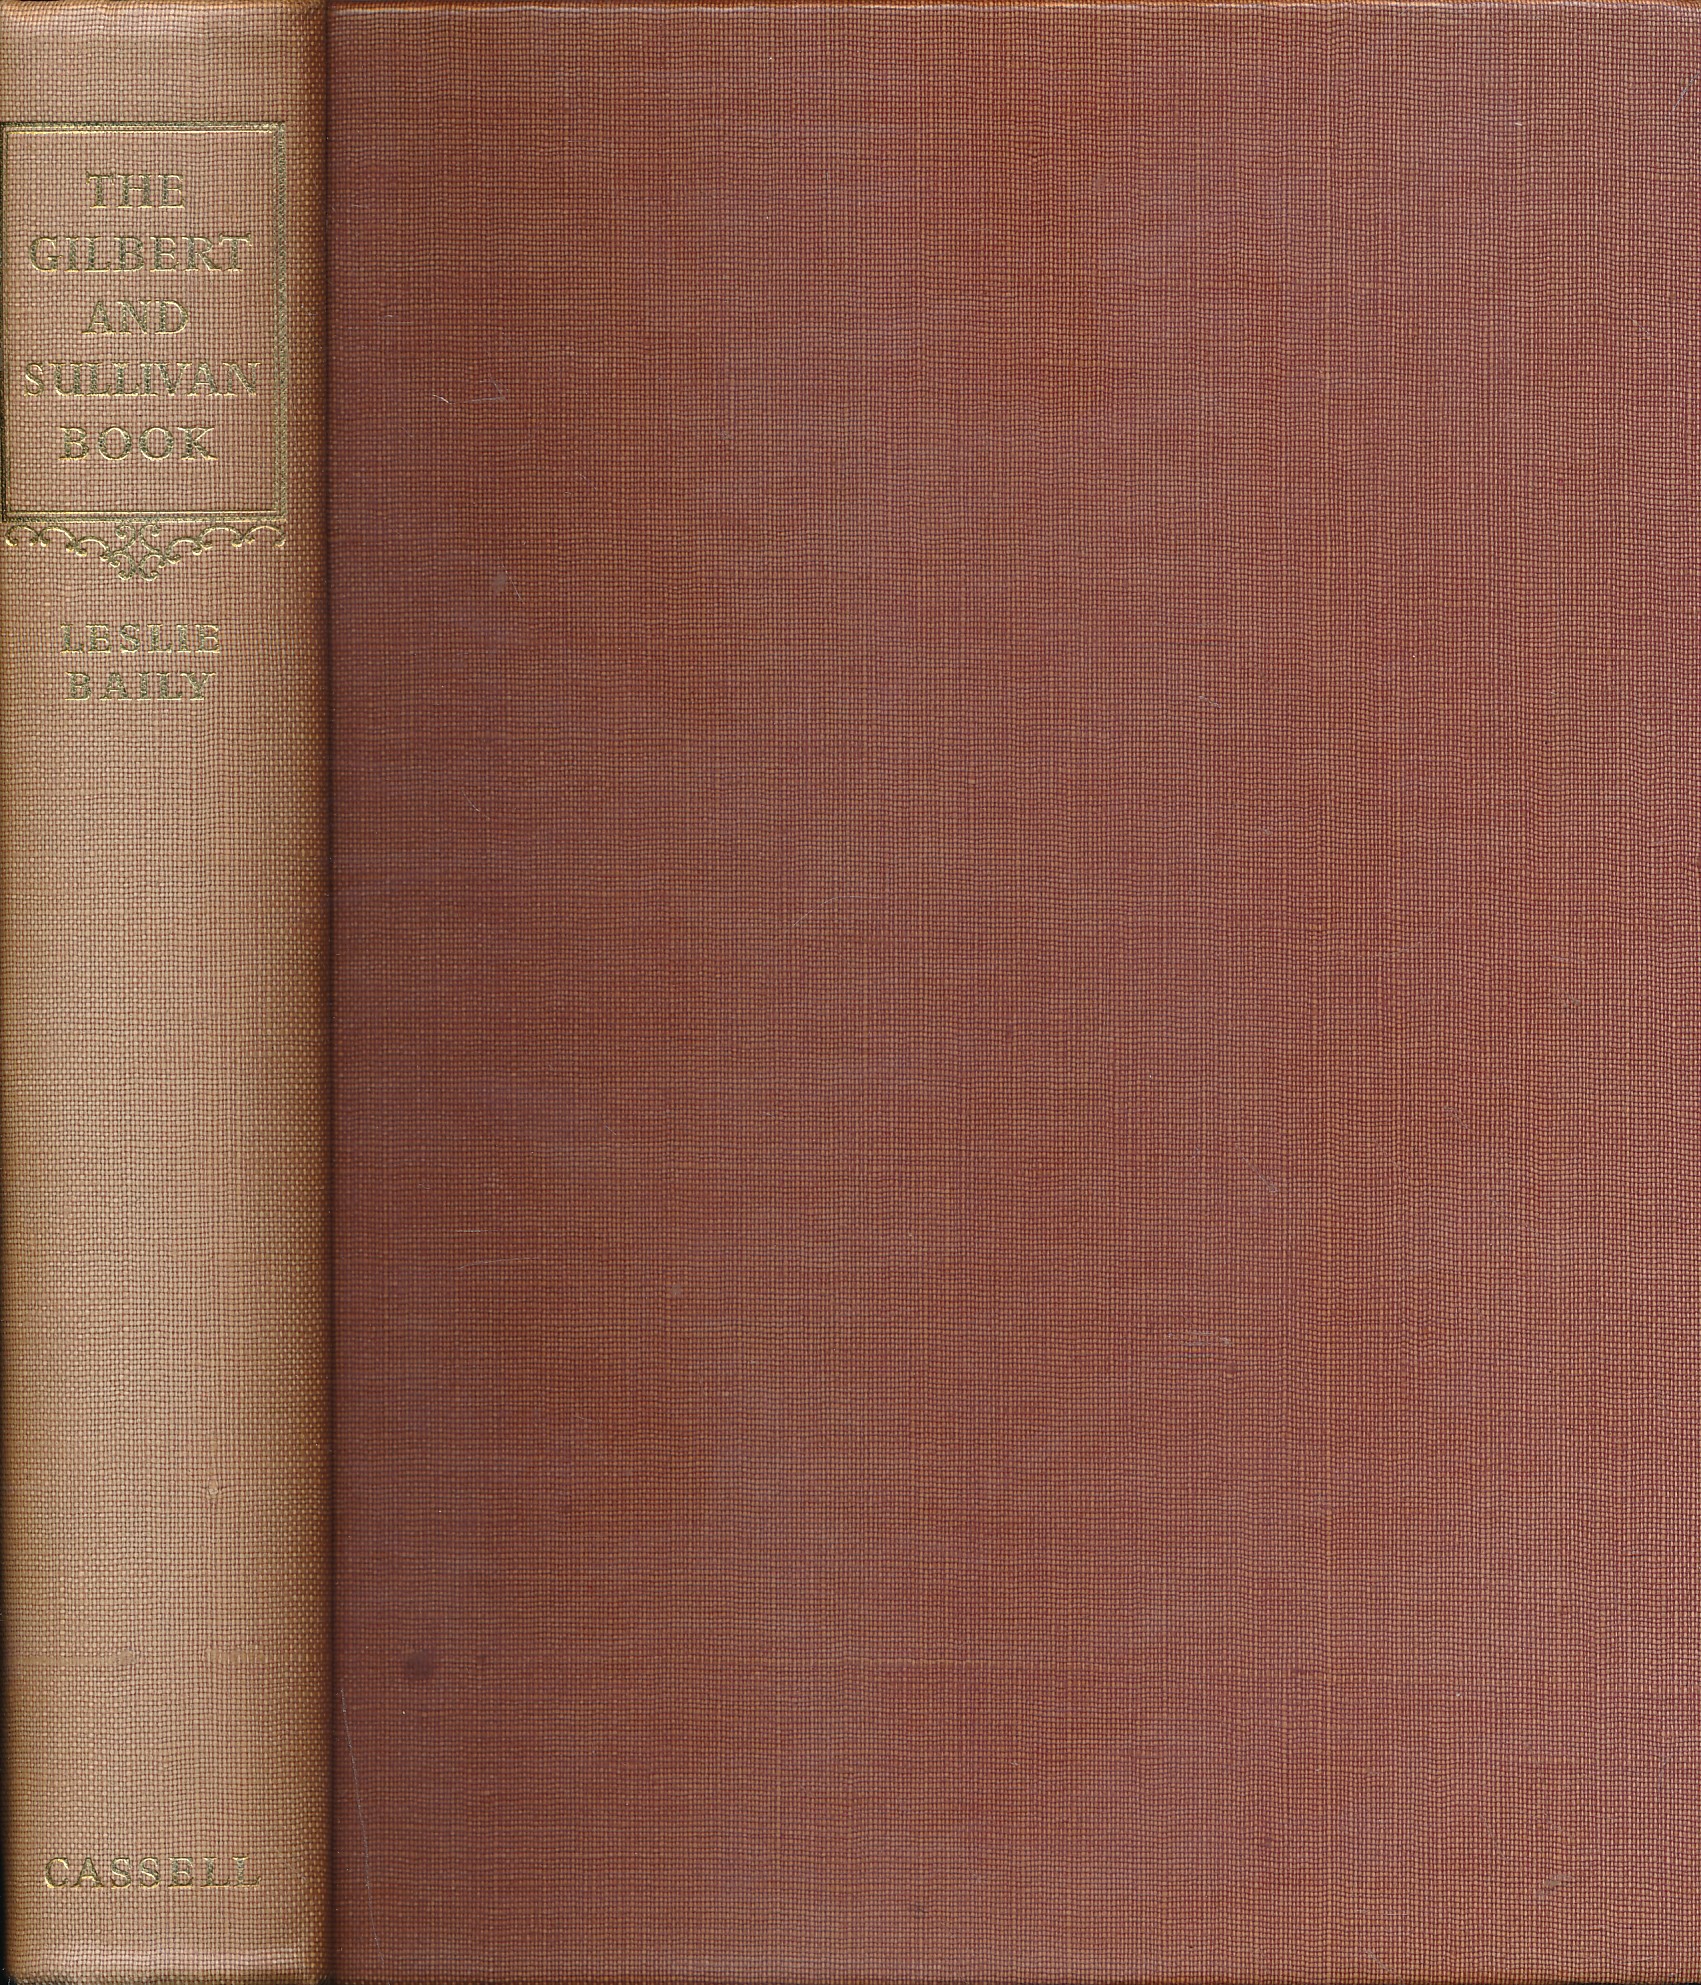 The Gilbert & Sullivan Book